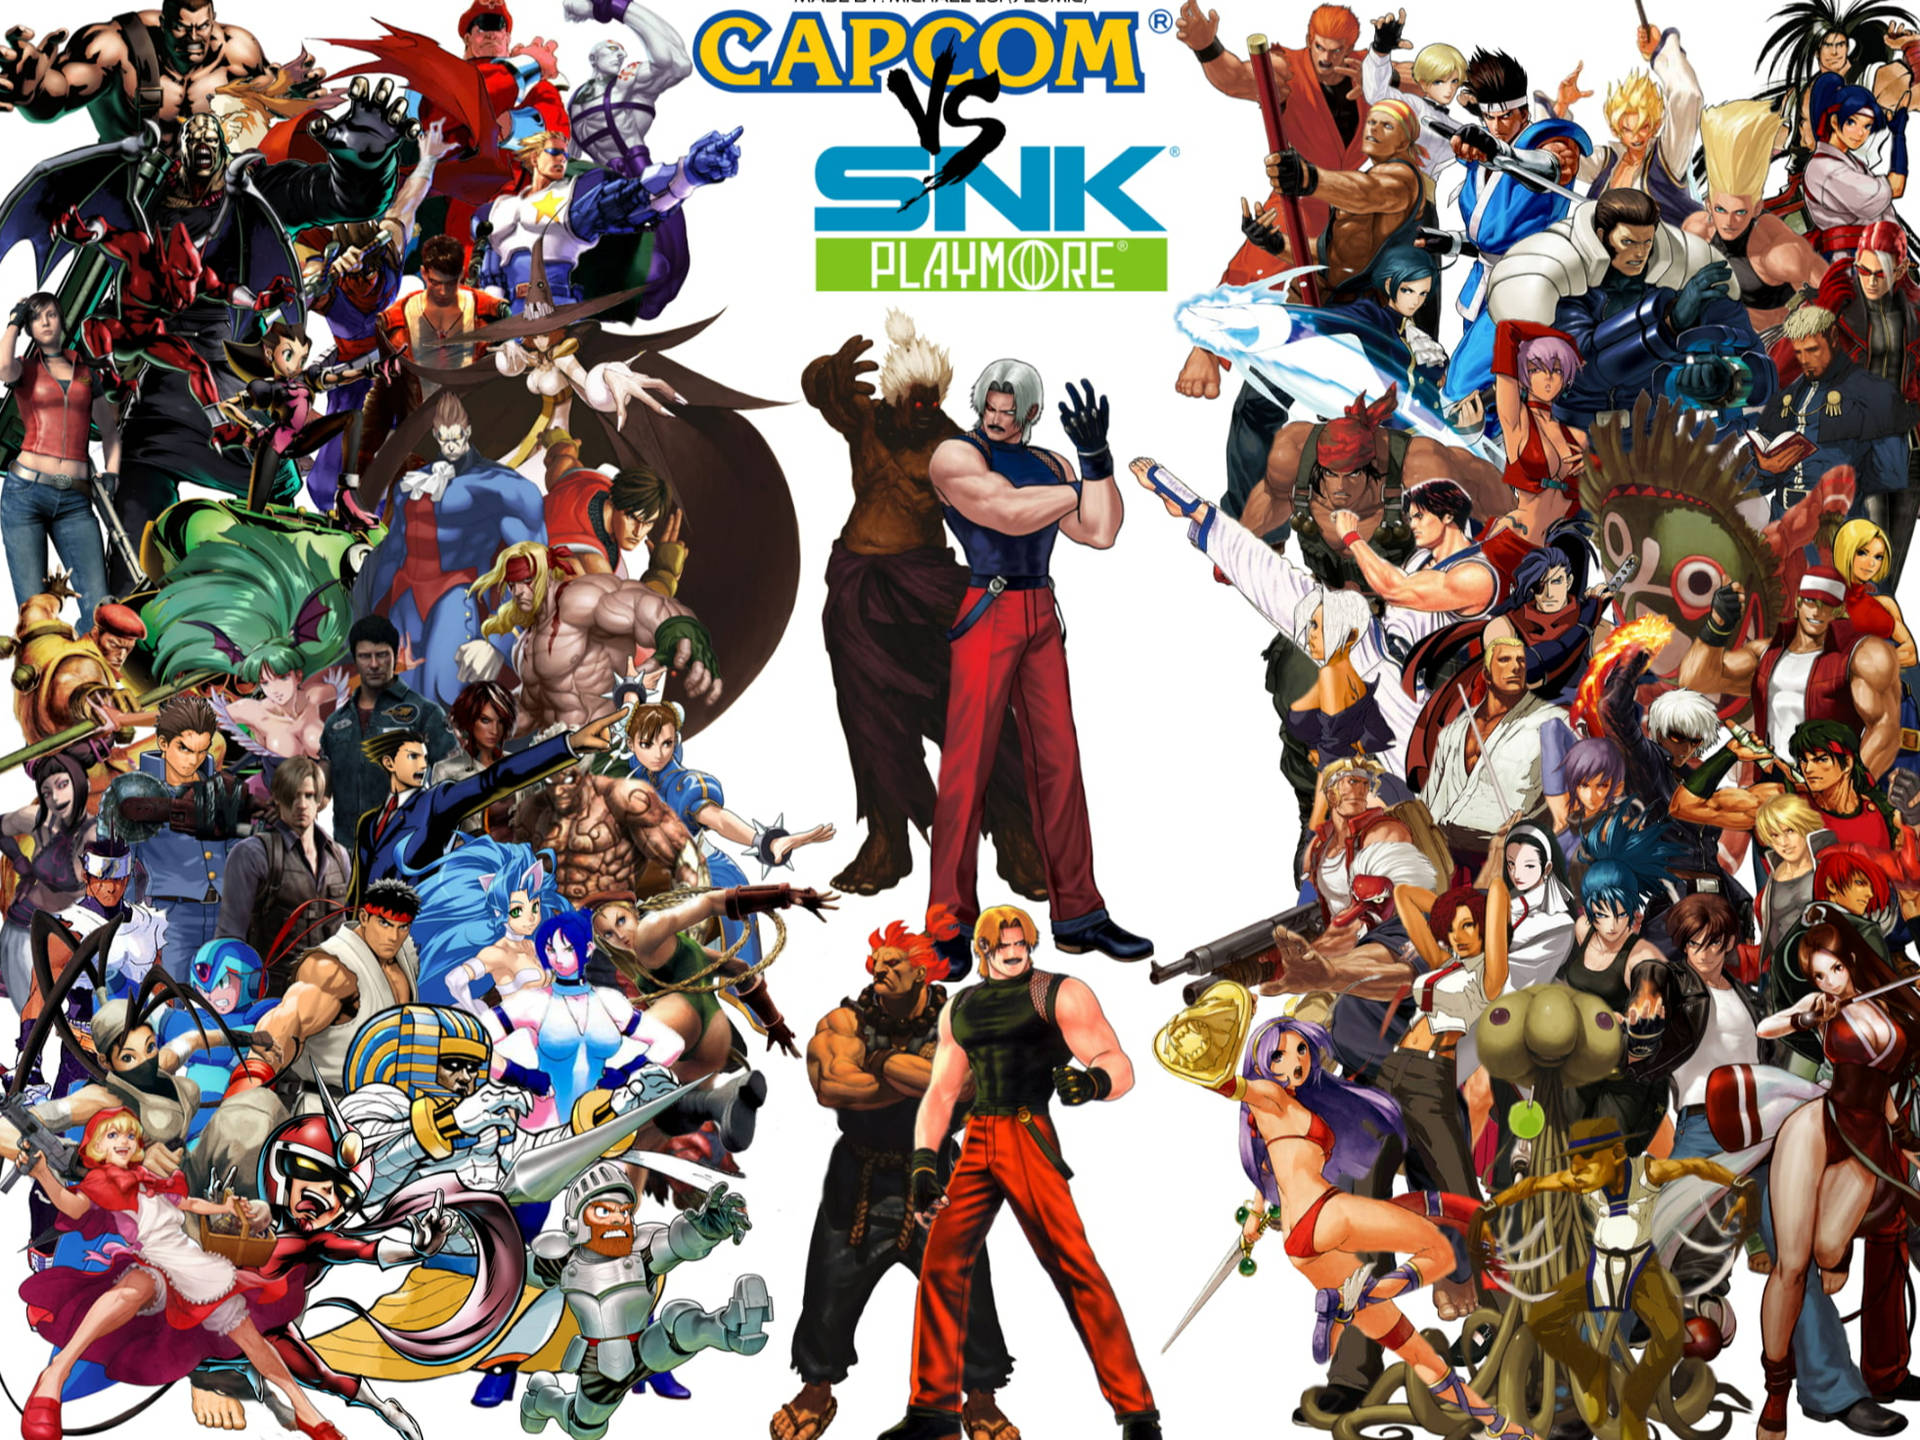 Capcom Vs Snk Poster Background